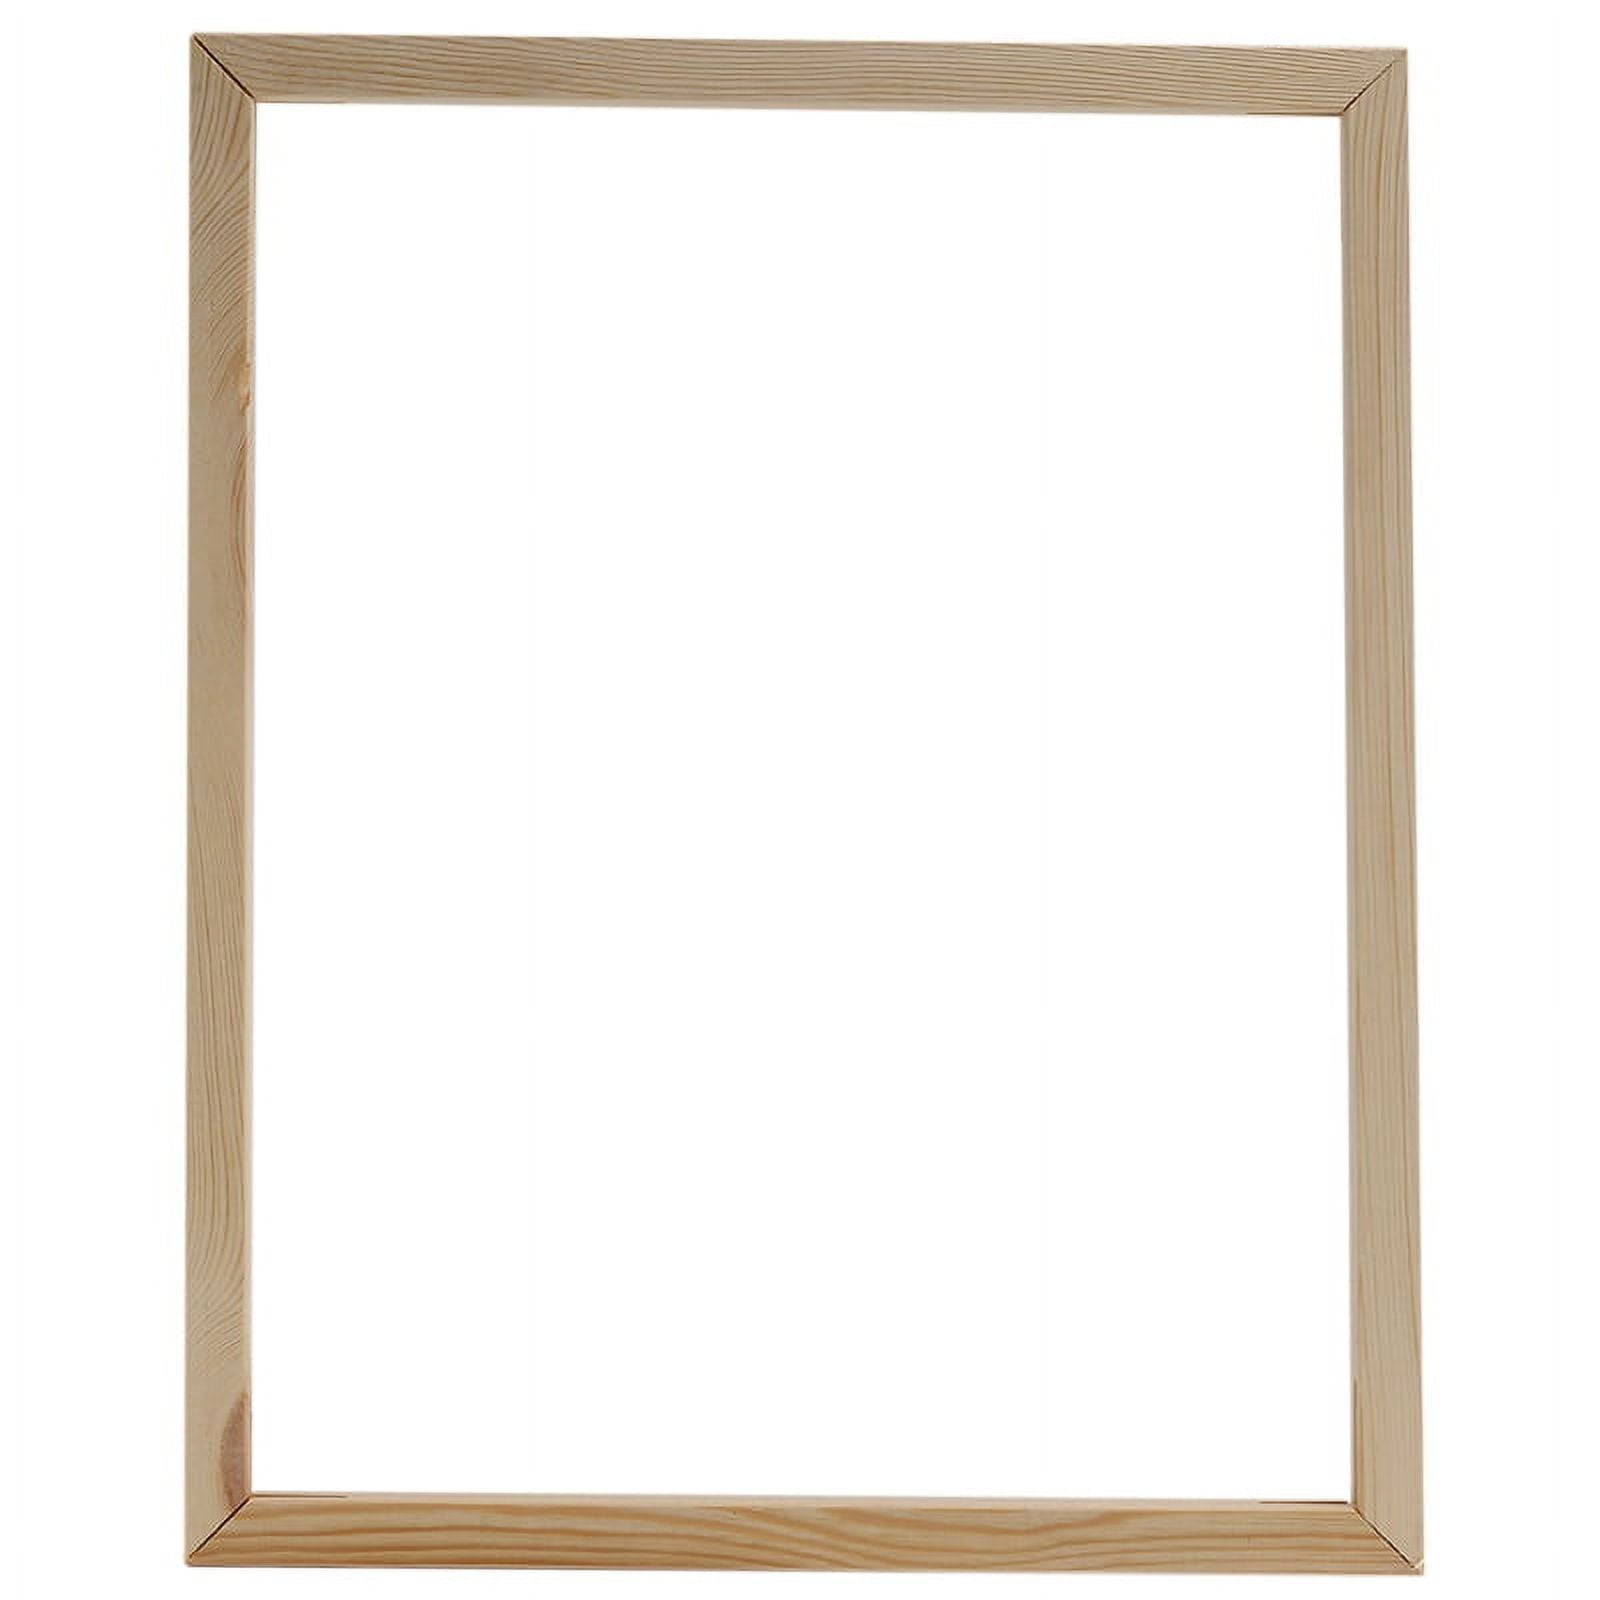 40X50 cm Wooden Frame DIY Picture Frames Art Suitable for Home Decor ...